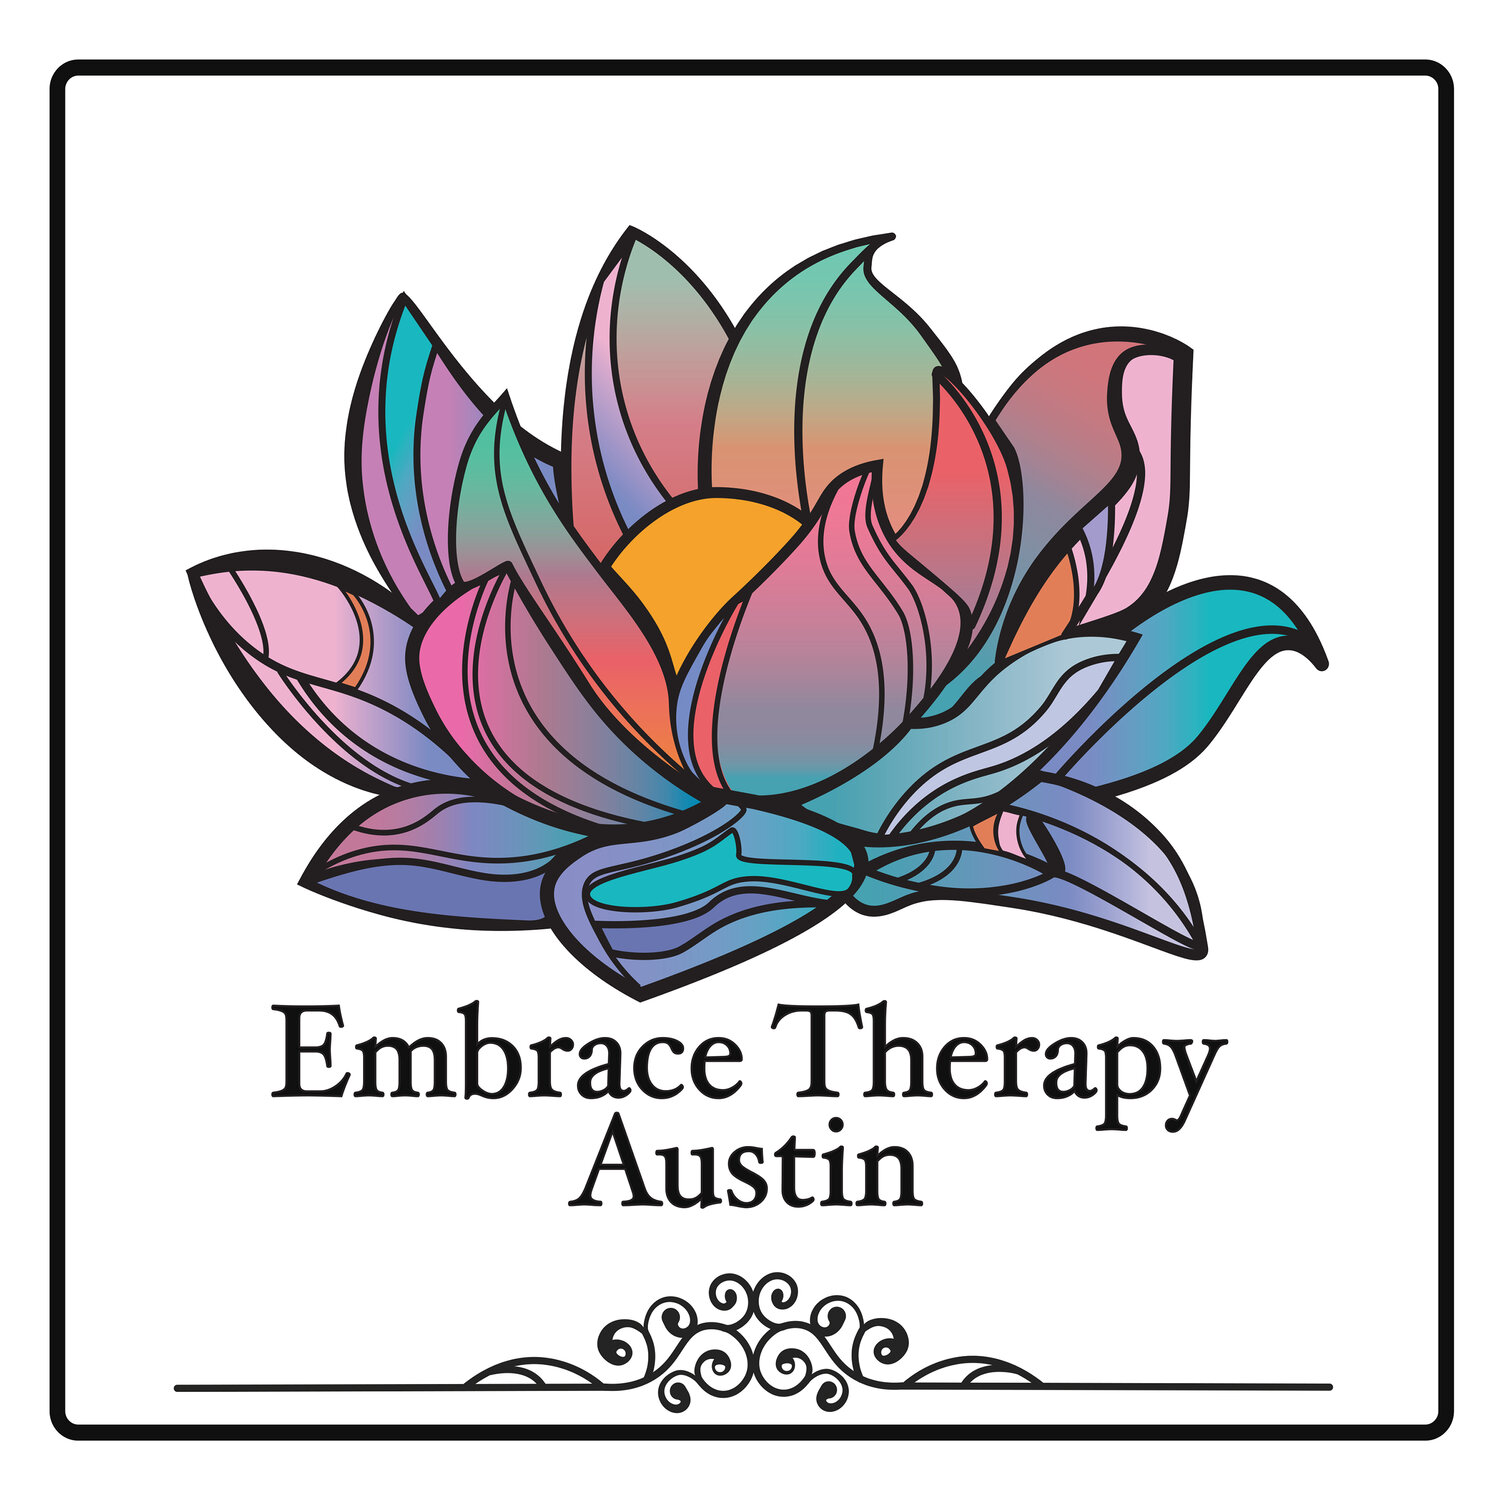 Embrace Therapy Austin